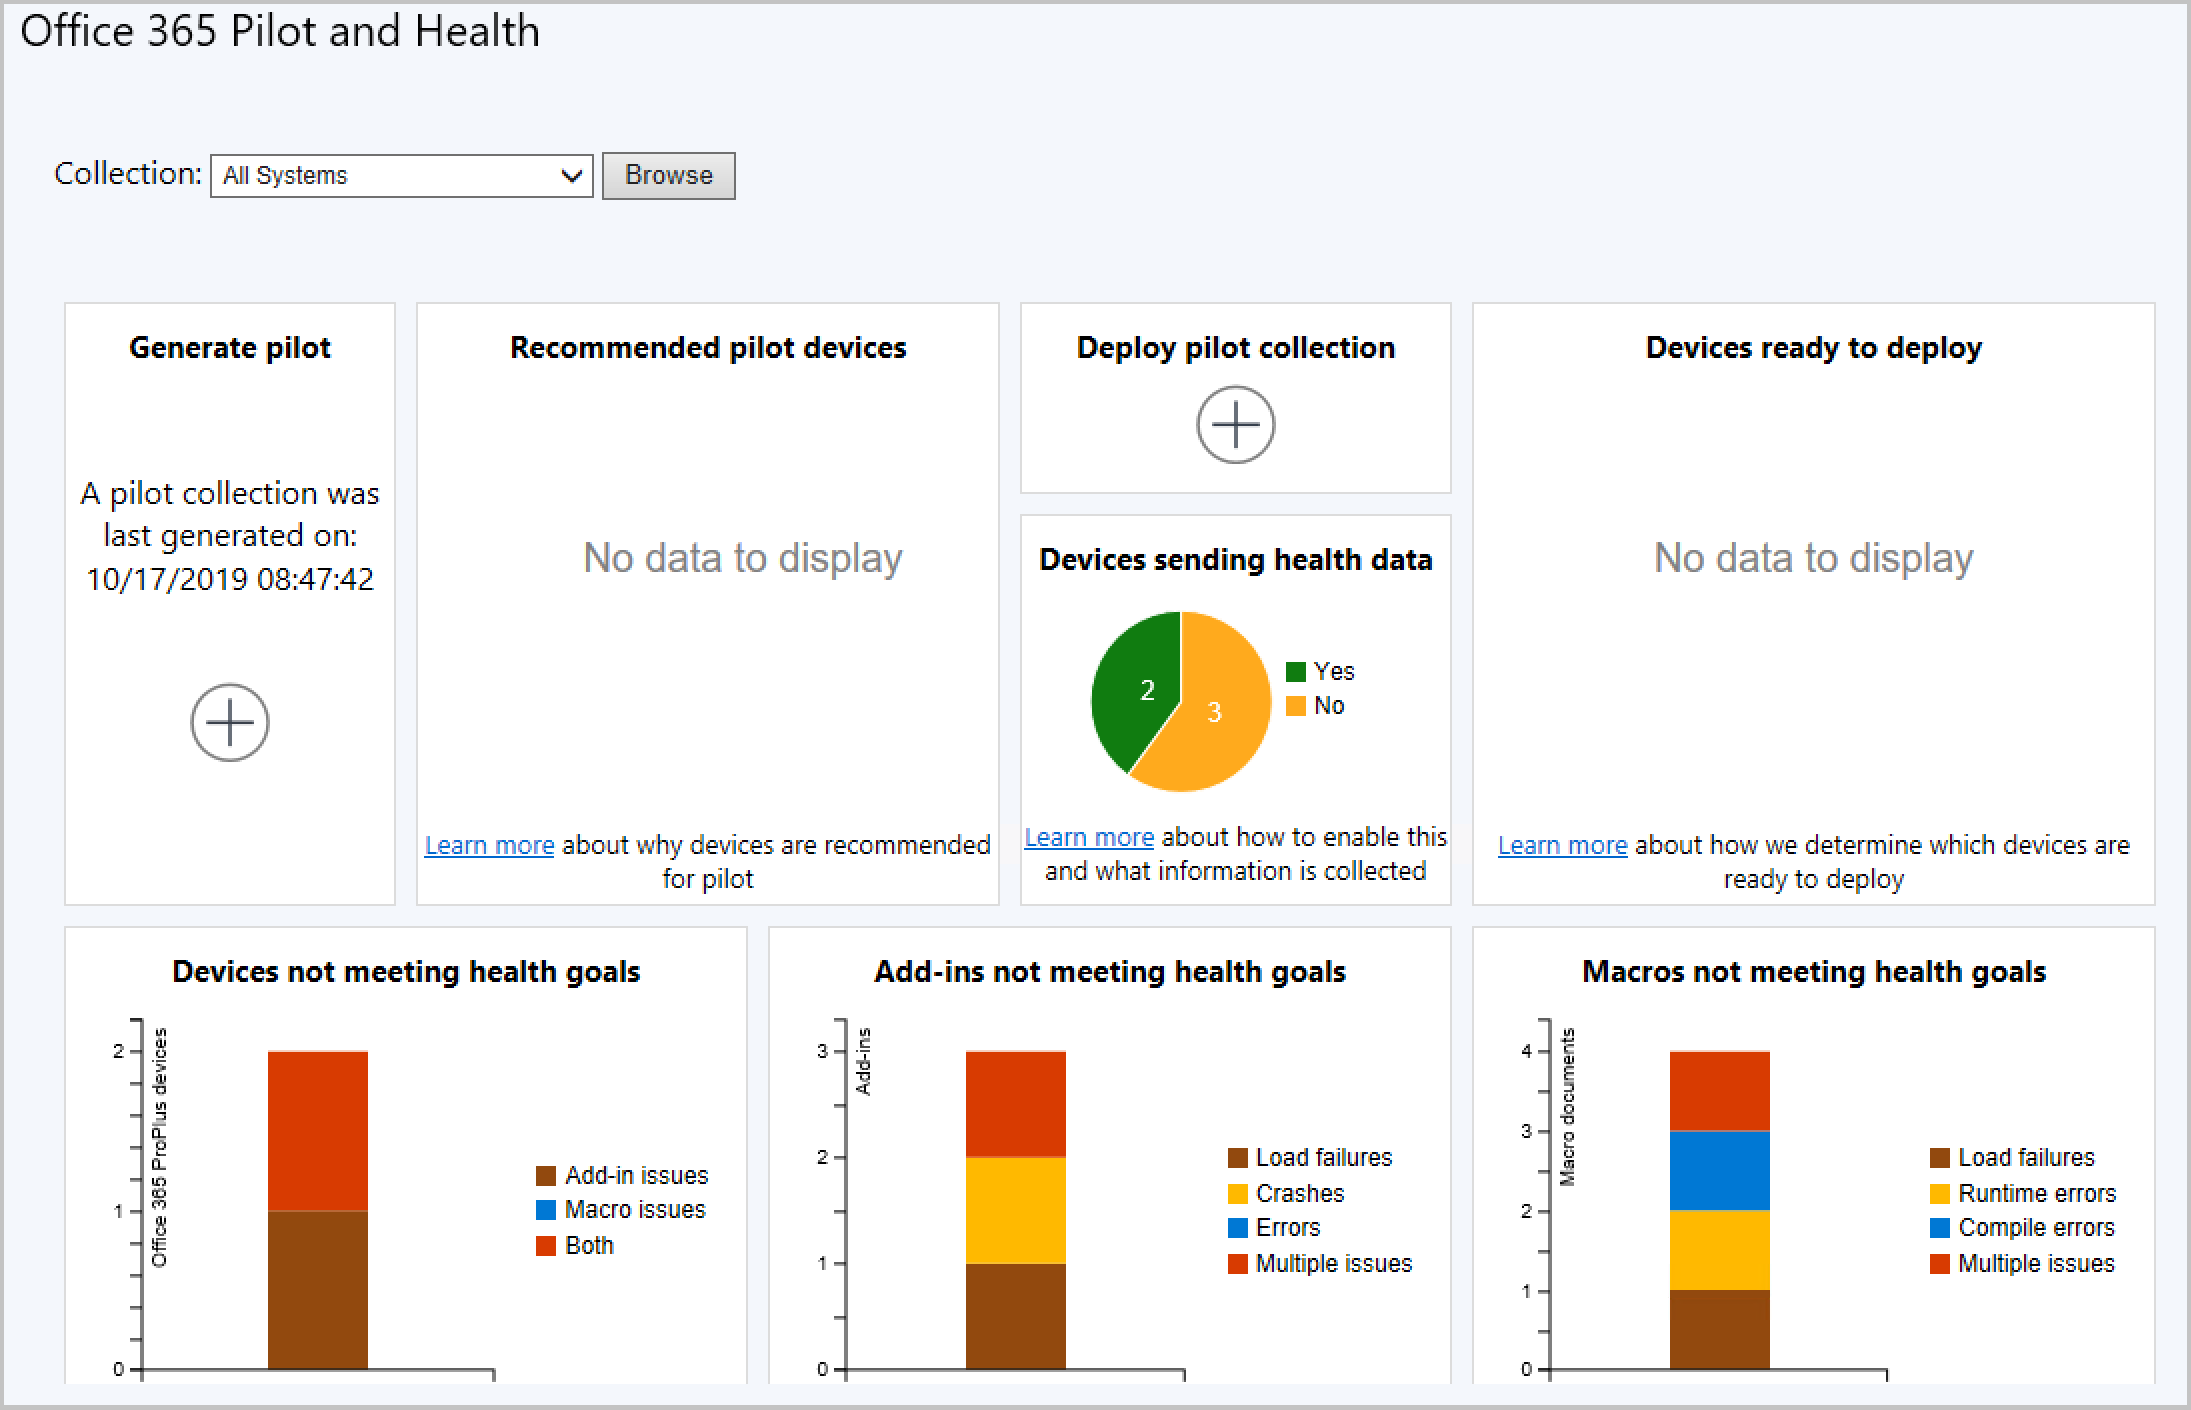 Office 365 Pilot and Health Dashboard screenshot